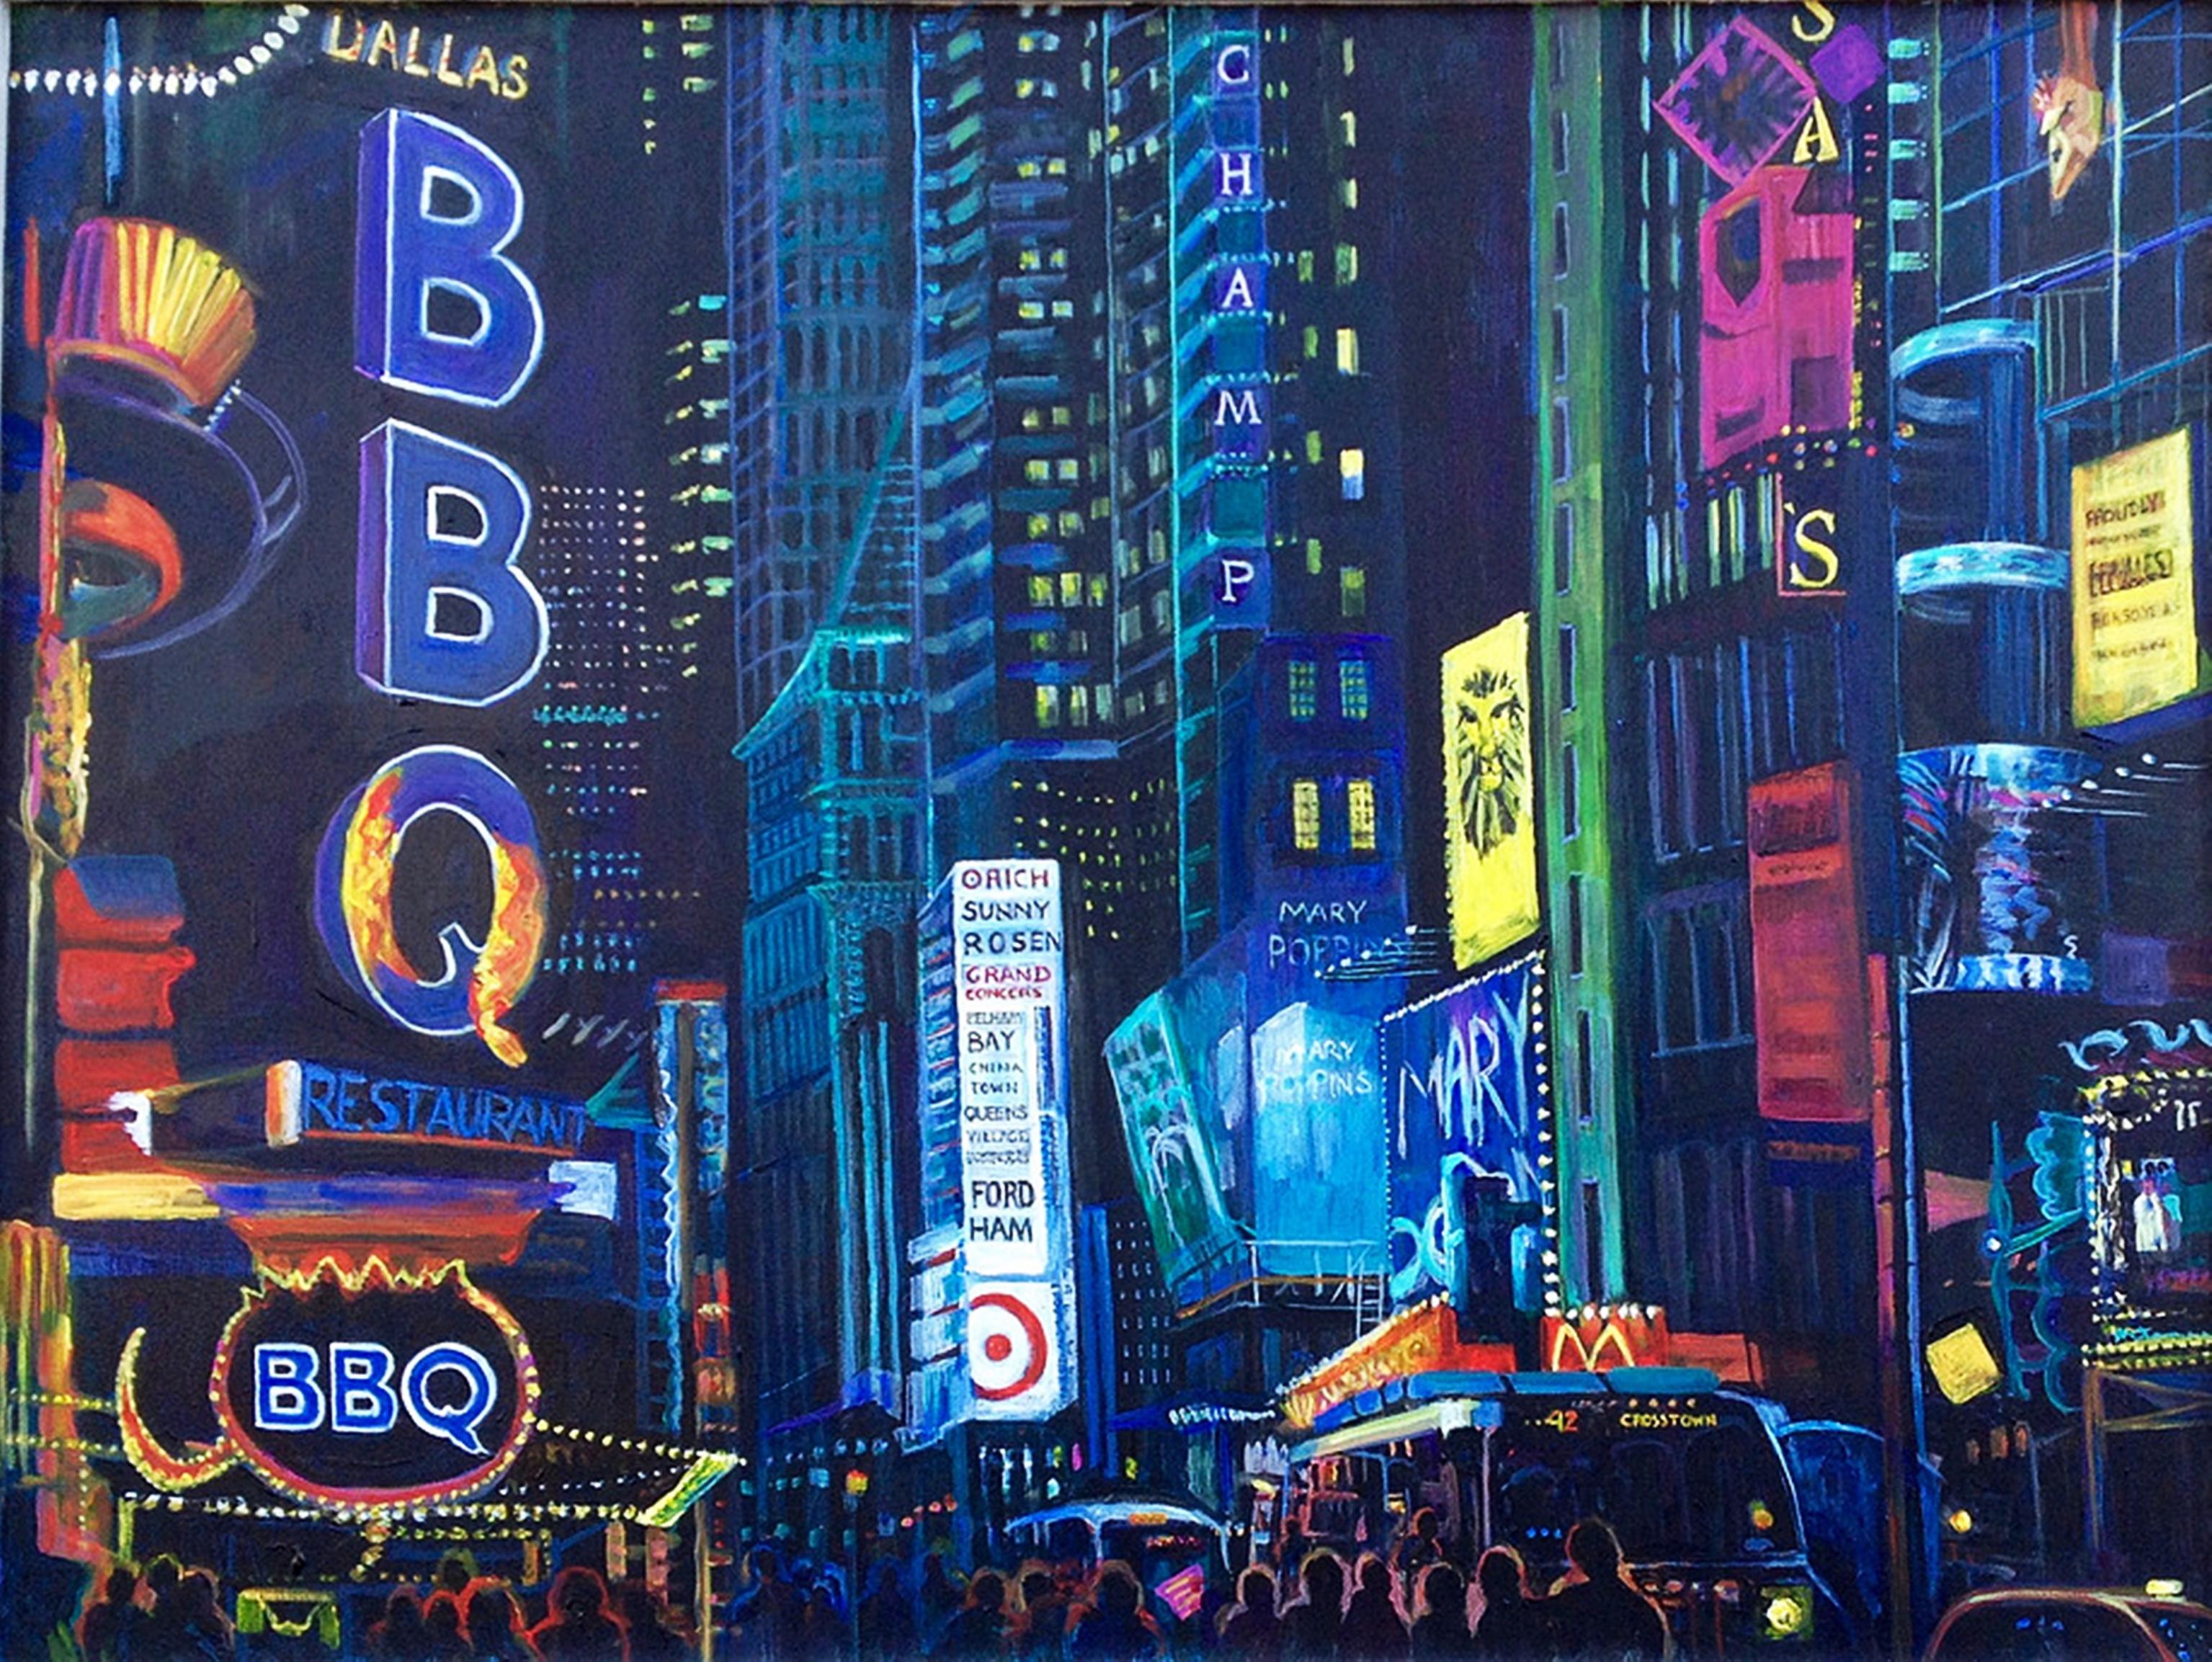 Thelma Appel Figurative Painting - Times Square IX (Dallas BBQ)